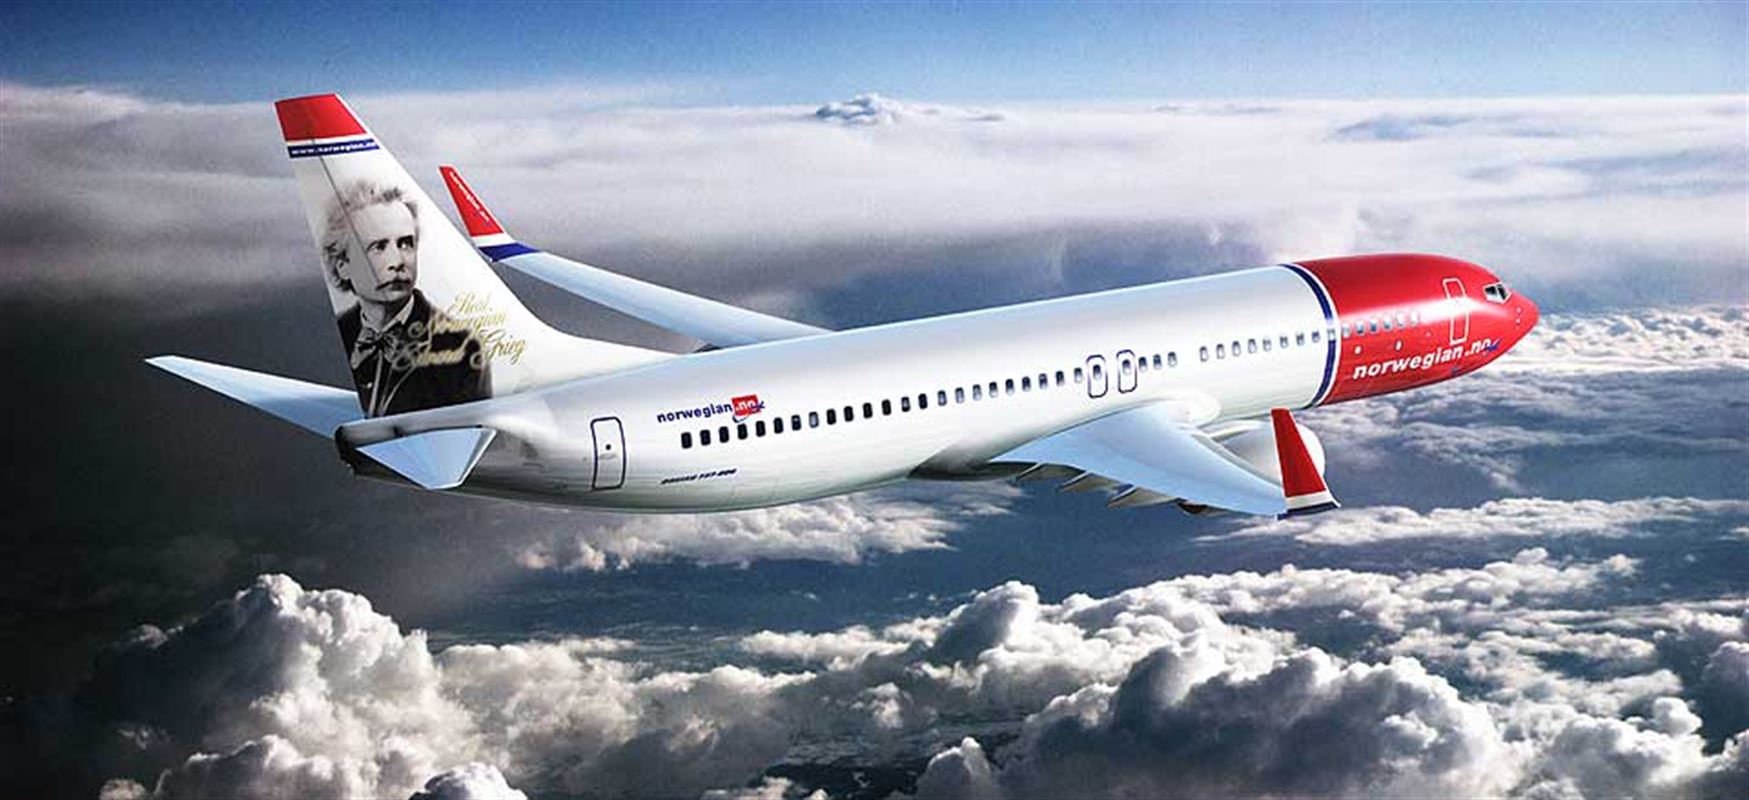 Desserte aérienne: Norwegian Air Shuttle débarque officiellement en Guyane